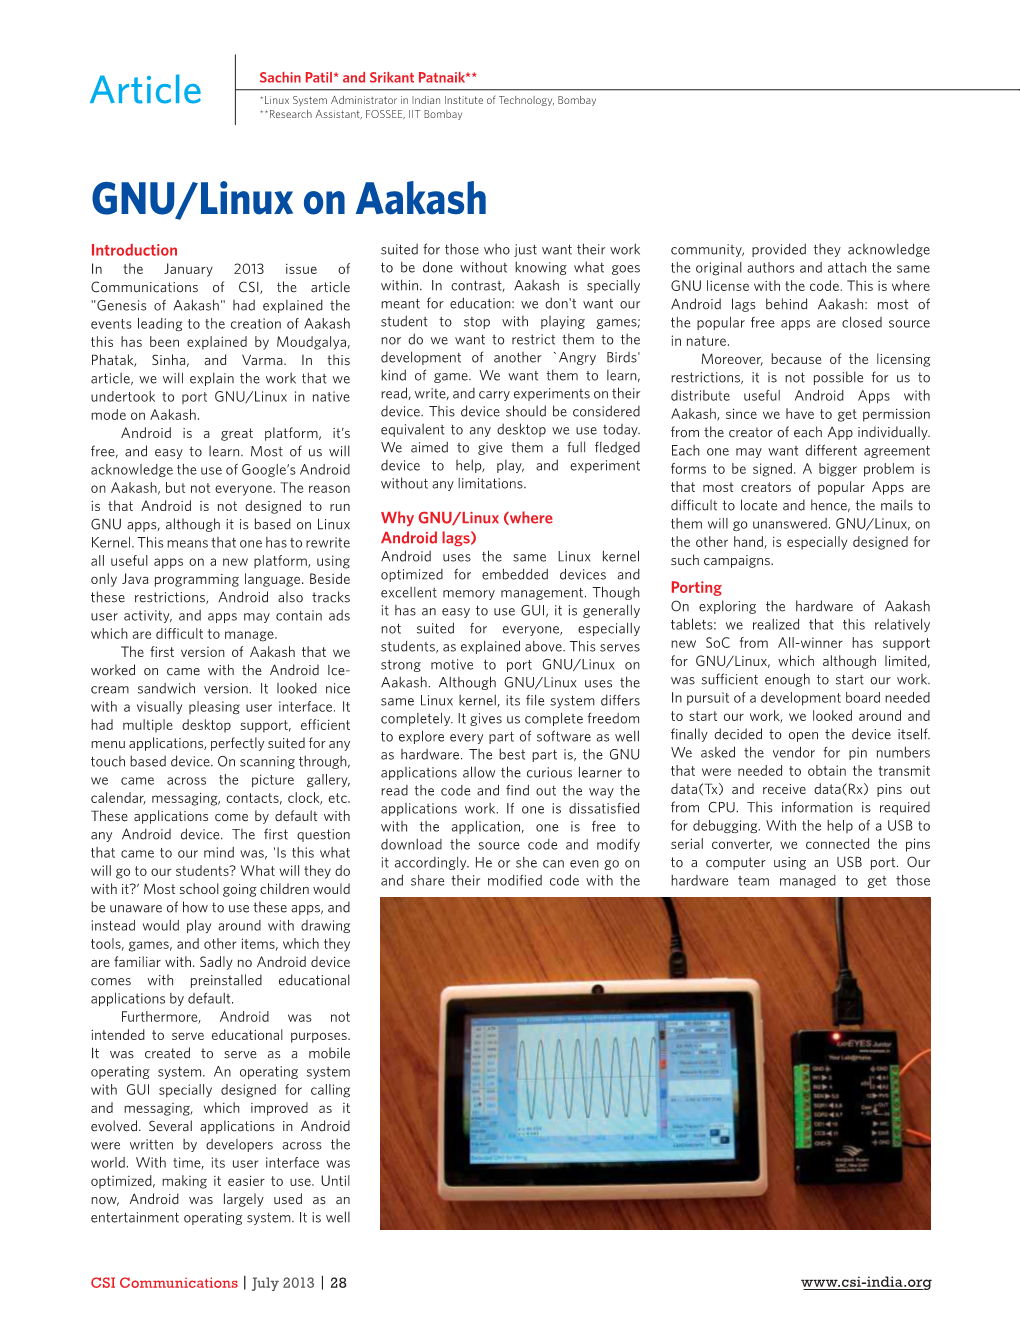 GNU/Linux on Aakash